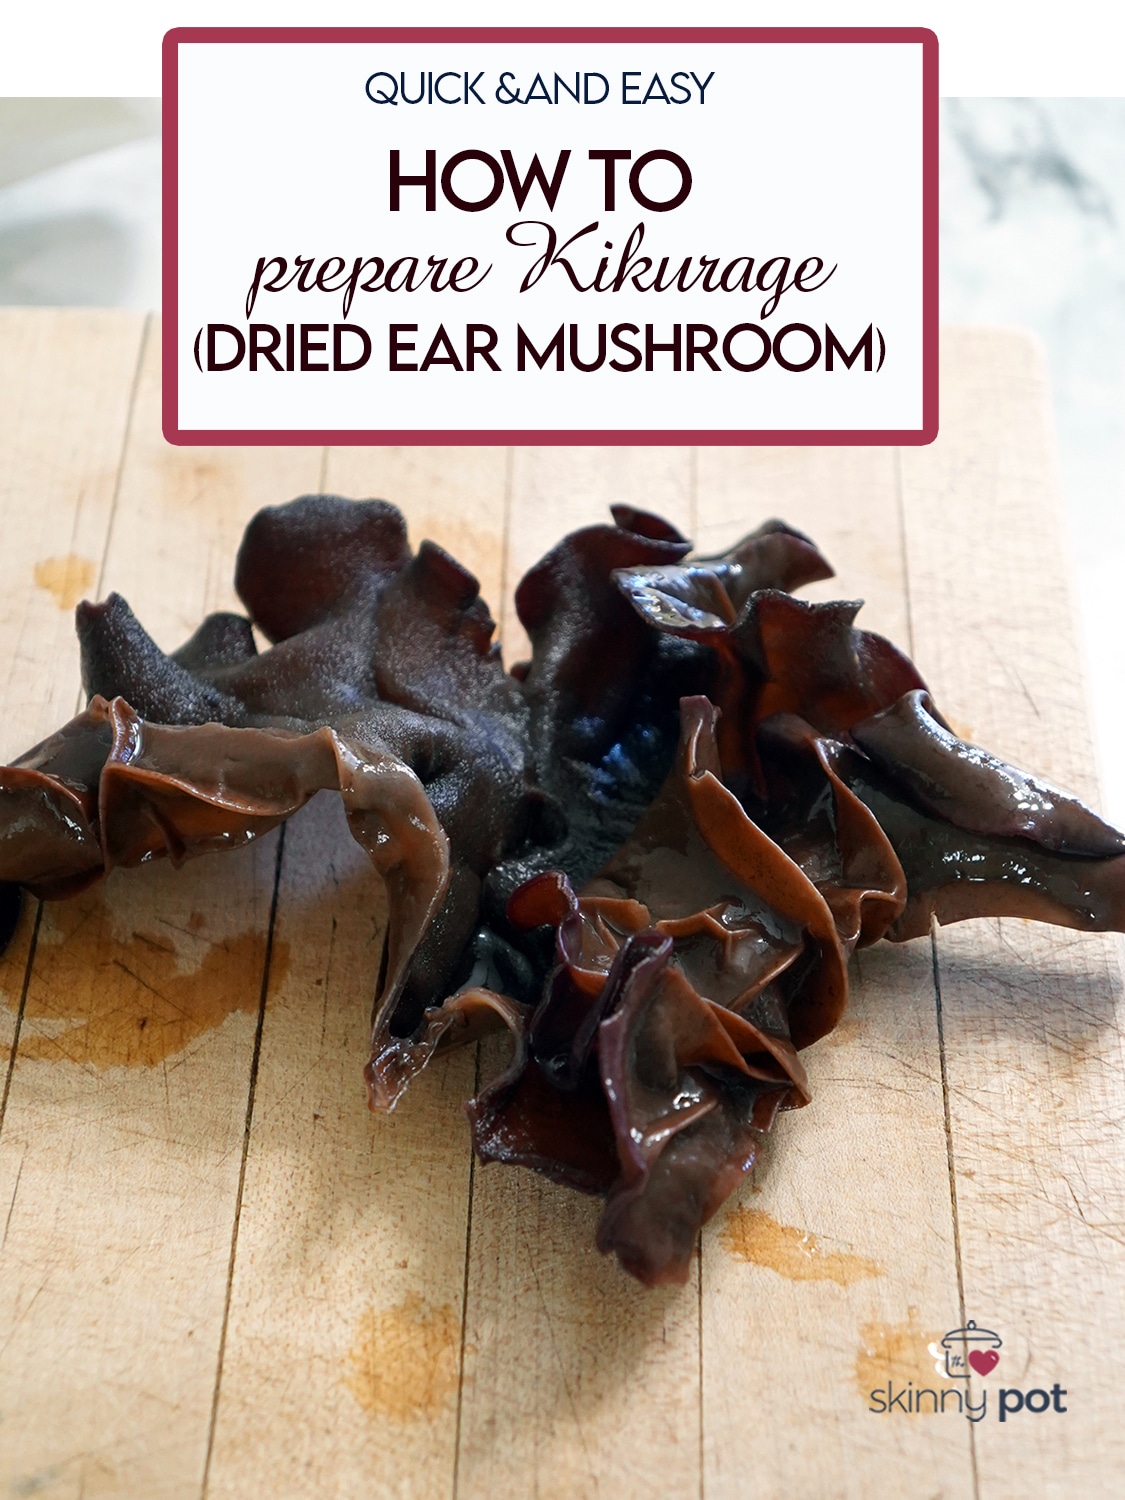 Dried ear mushroom